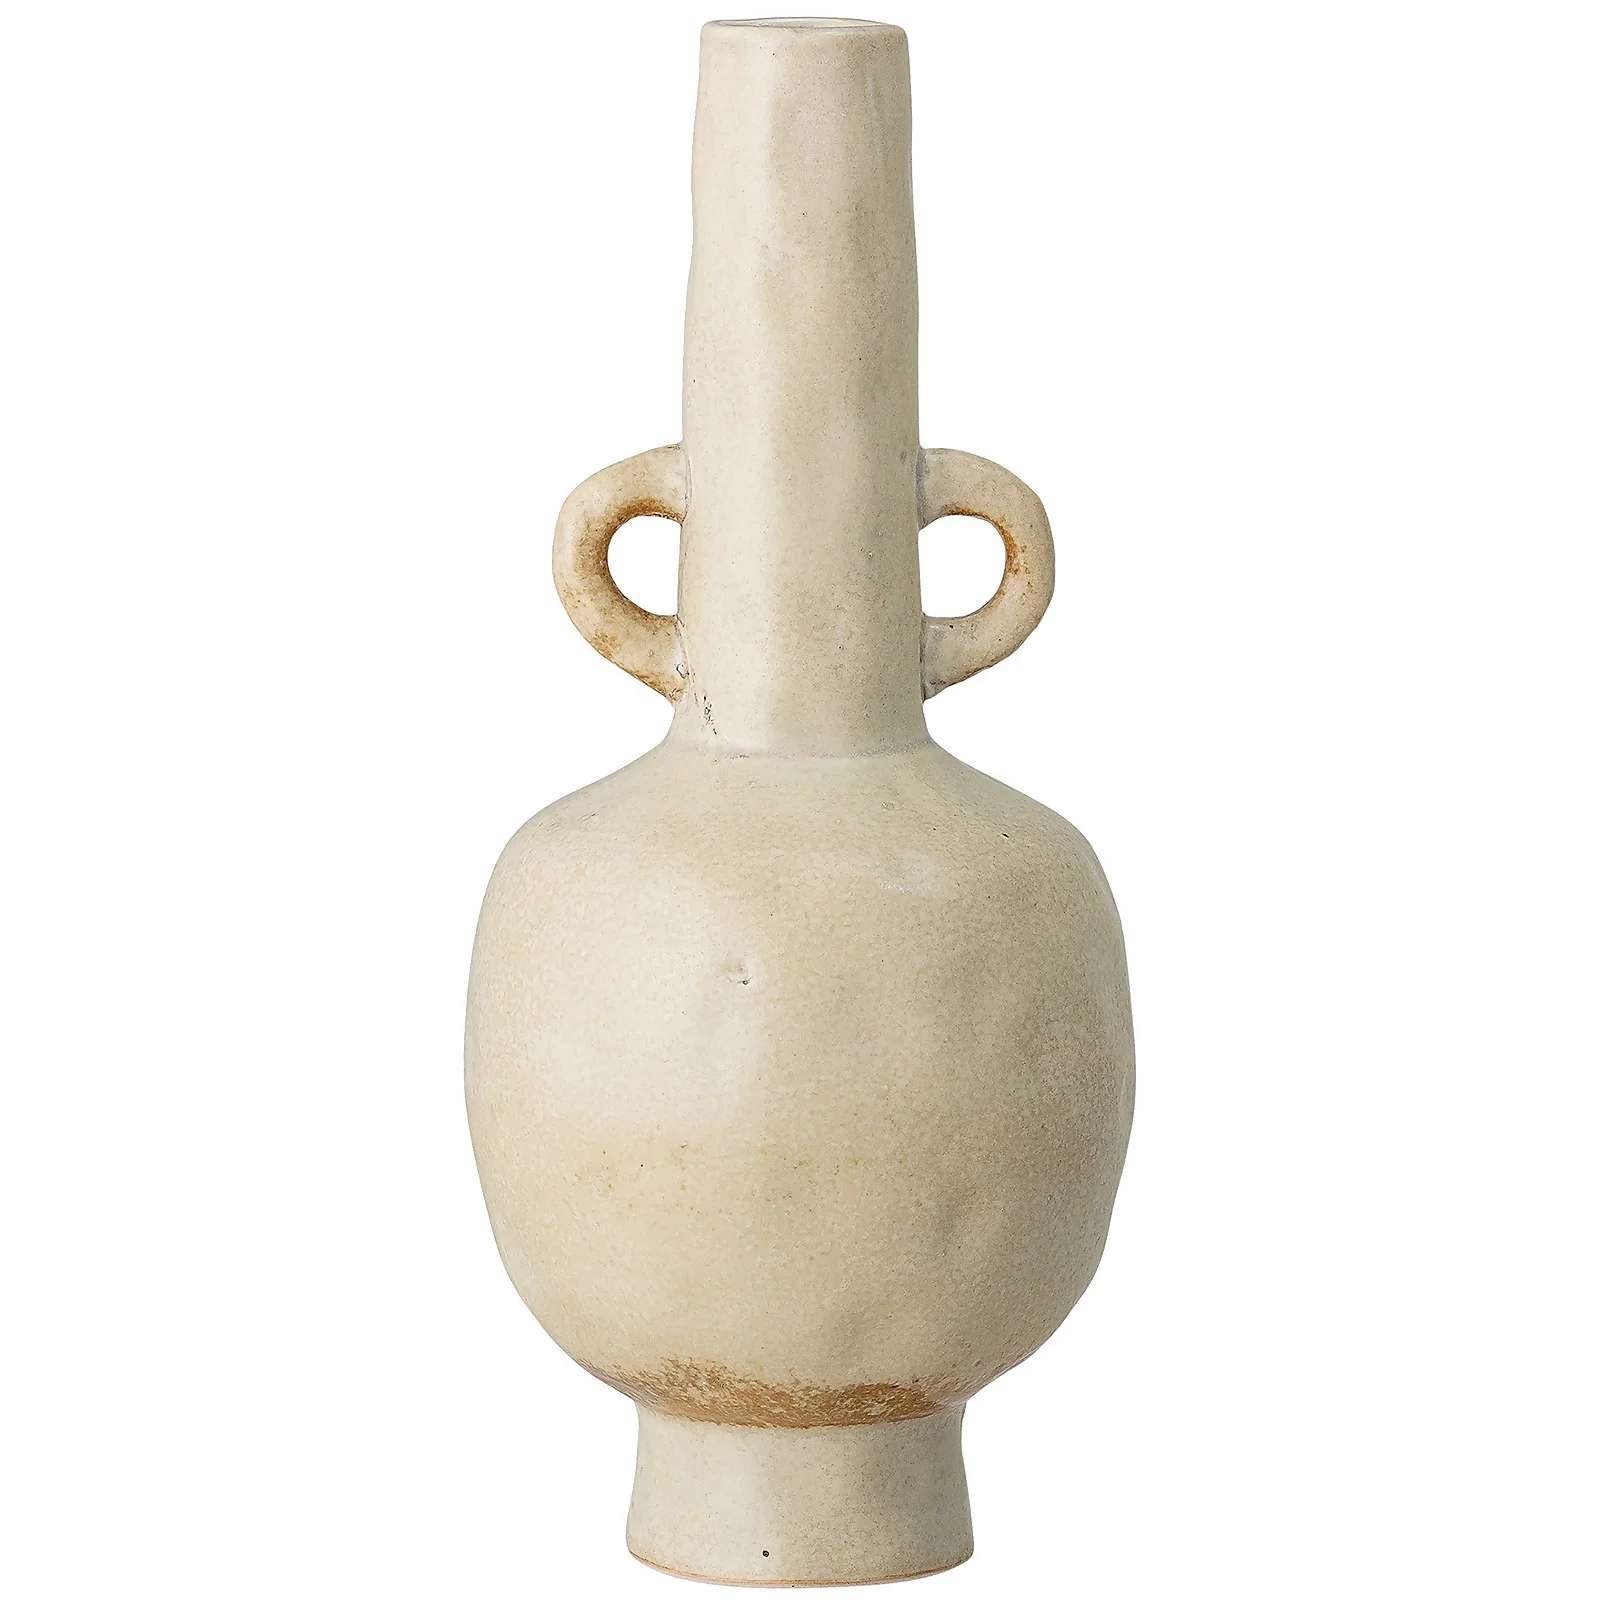 Bloomingville Tall Stoneware Vase - Natural Image 1